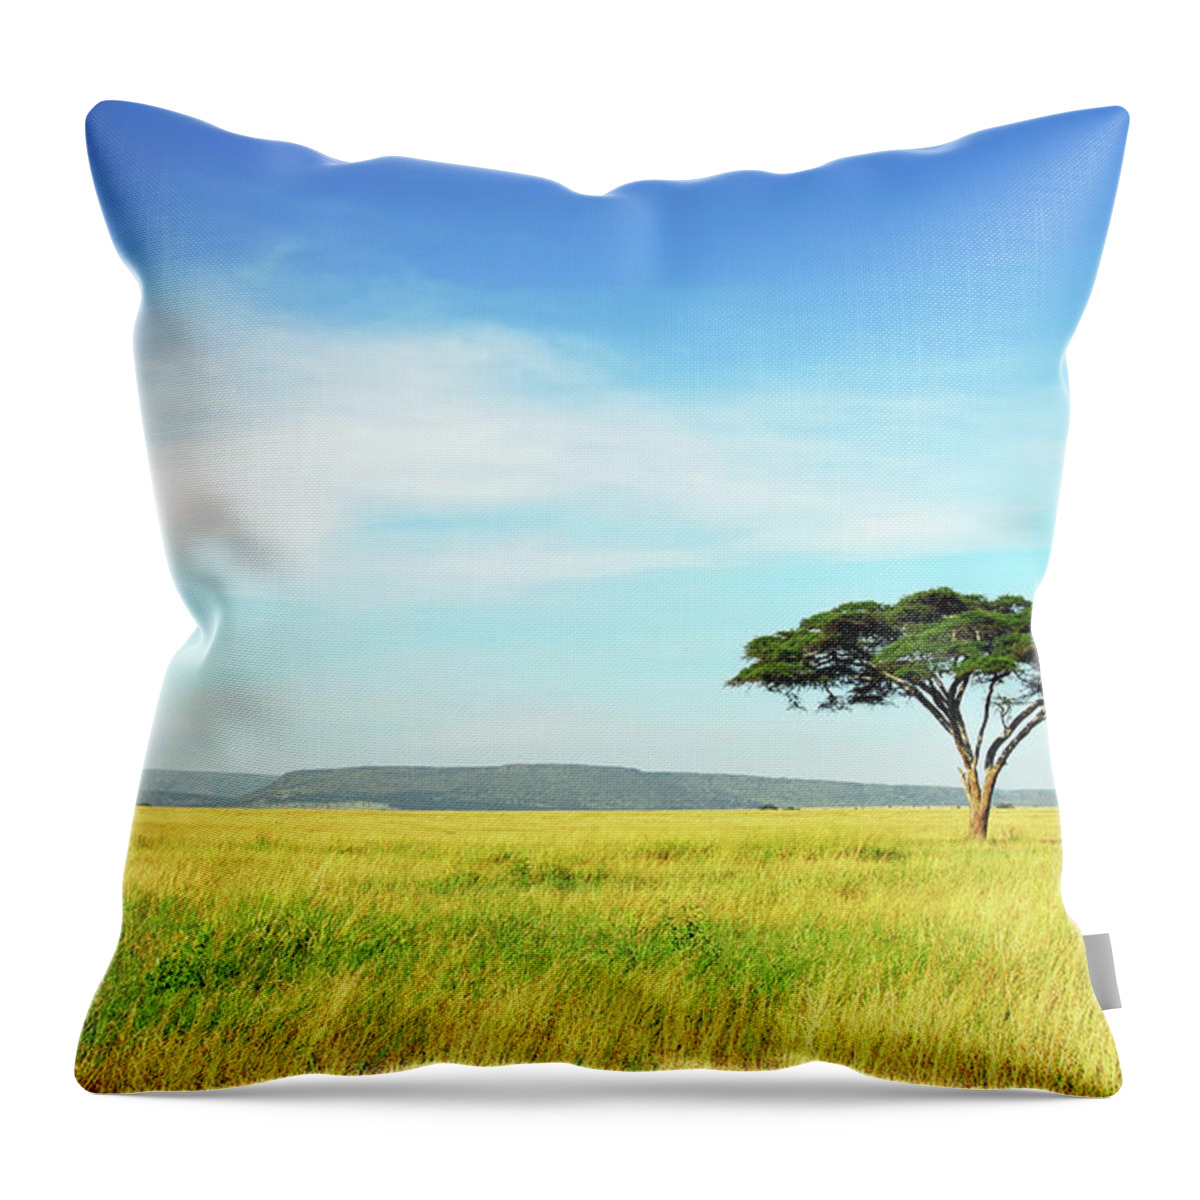 Scenics Throw Pillow featuring the photograph Lone Acacia Tree, Serengeti National by Raisbeckfoto